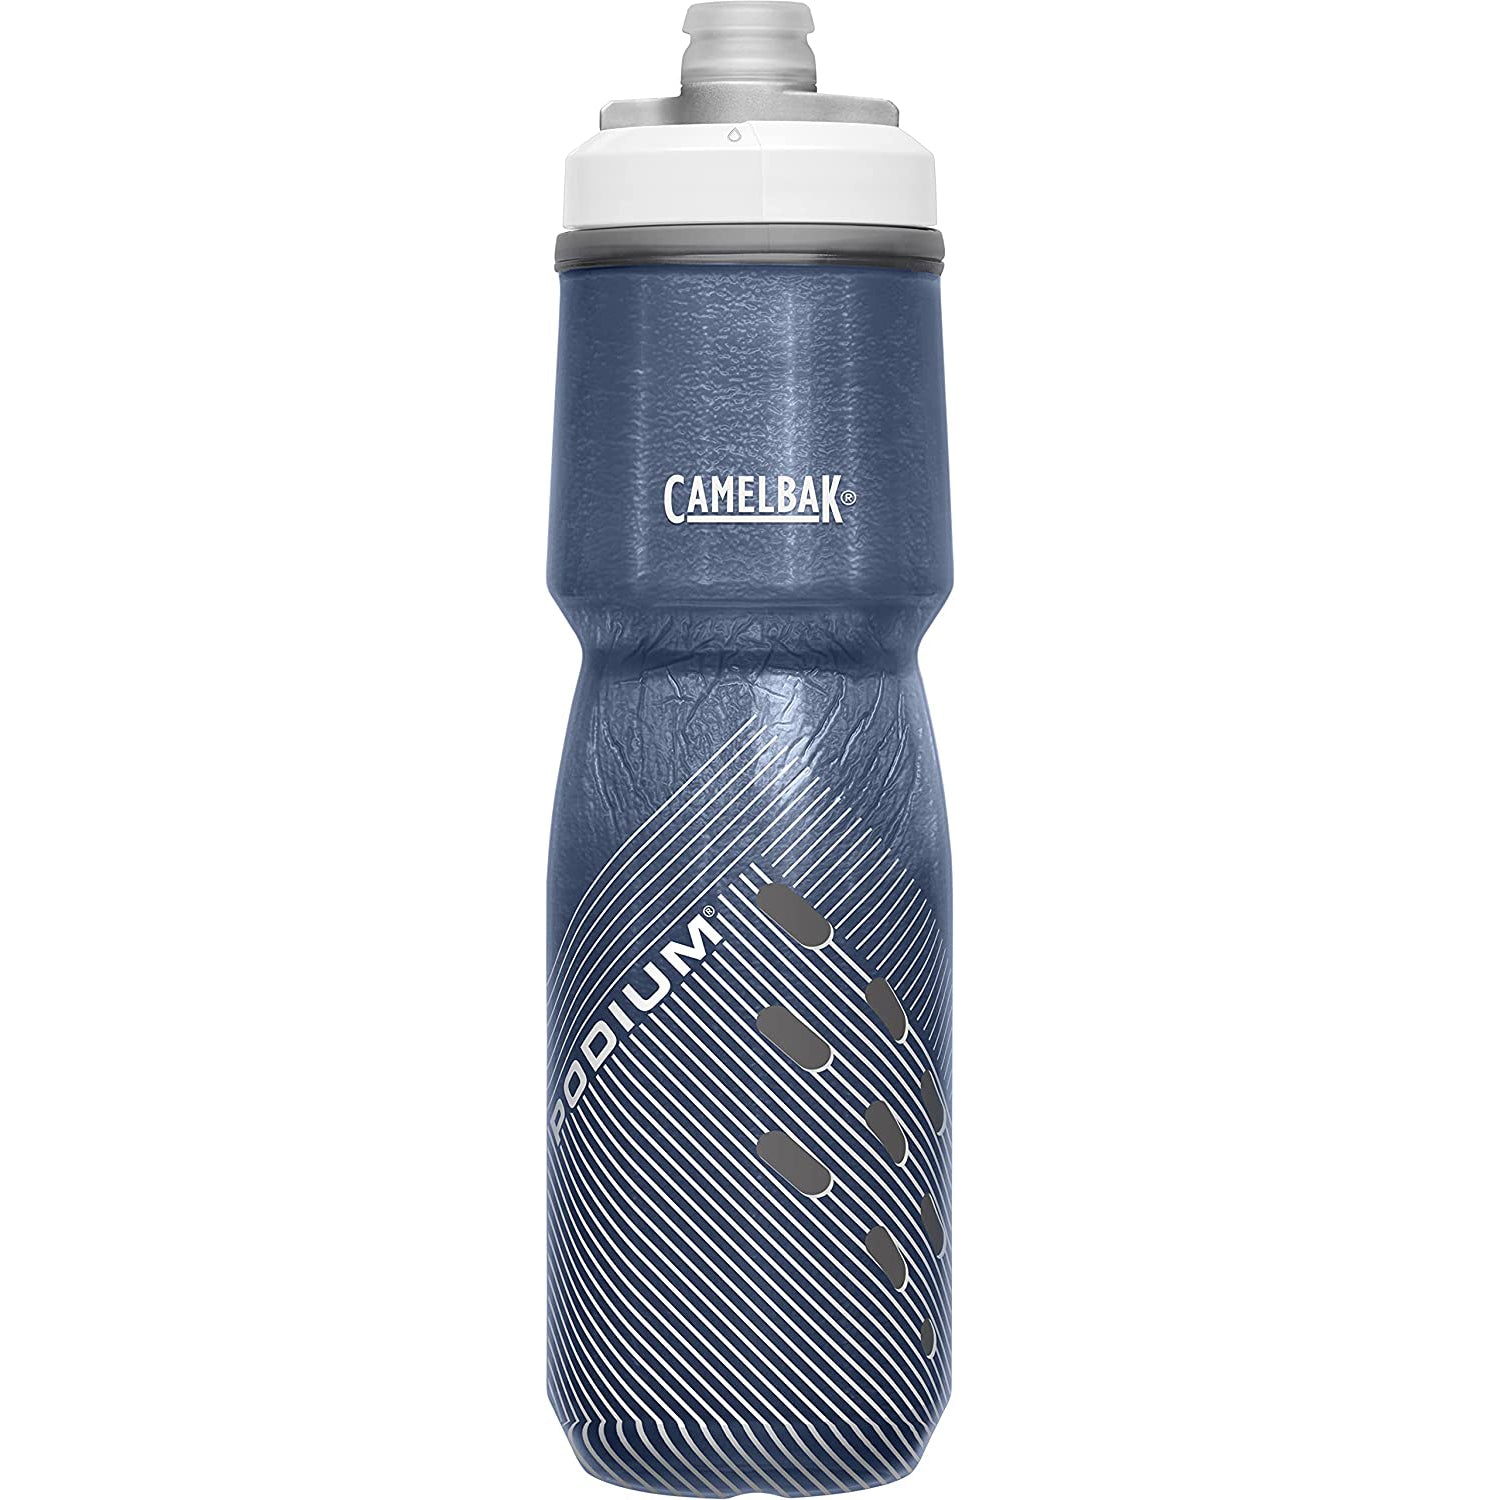 Camelbak Podium Chill Bottle, Navy Perforated - 24OZ/710 ML - Best Price online Prokicksports.com